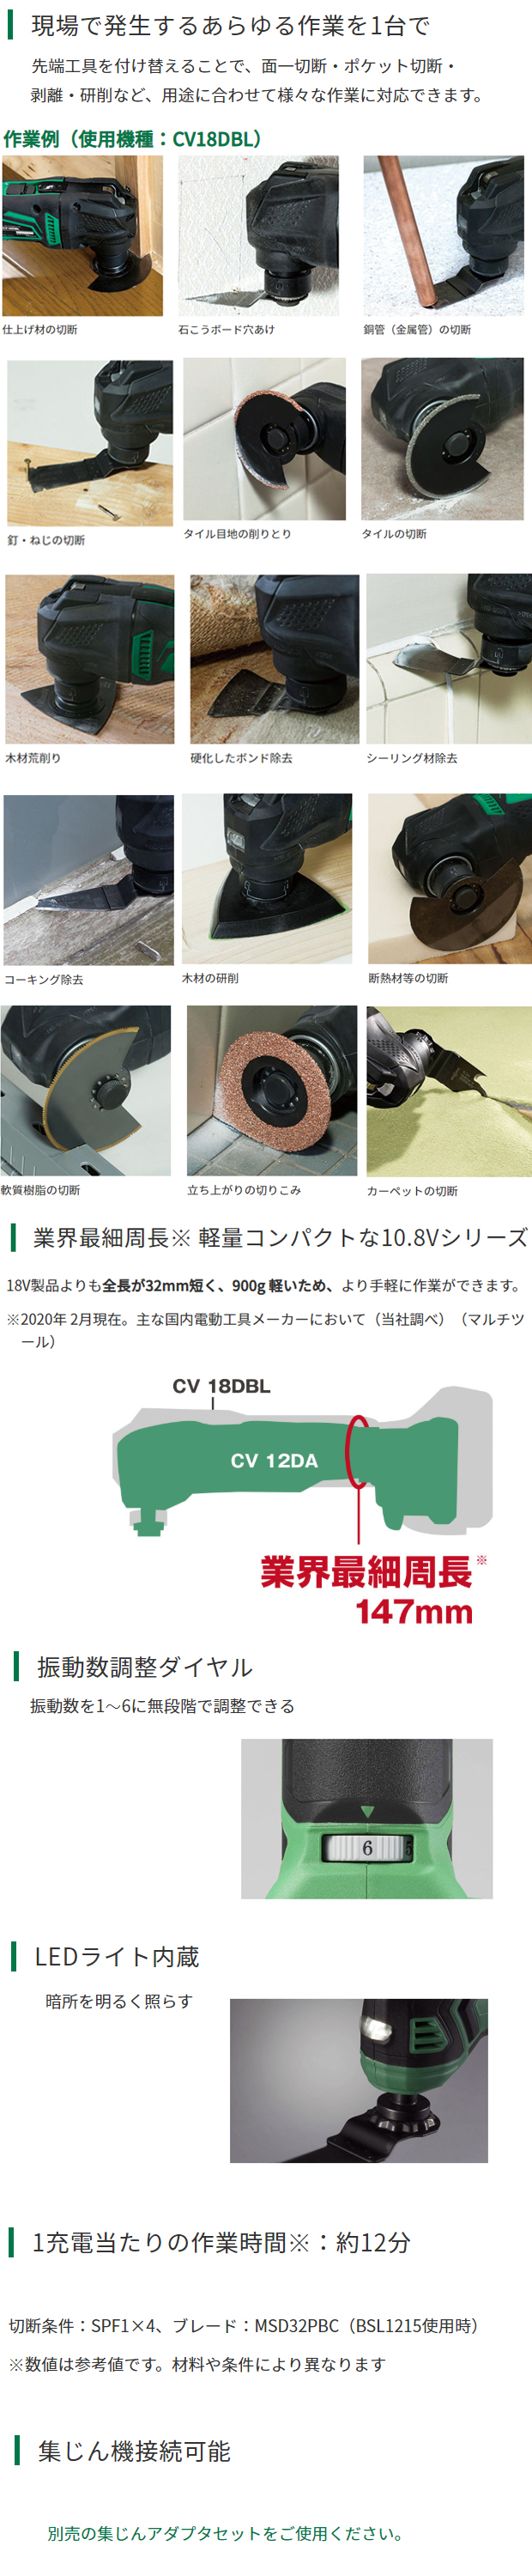 Hikoki 10.8Vコードレスマルチツール CV12DA 電動工具・エアー工具 